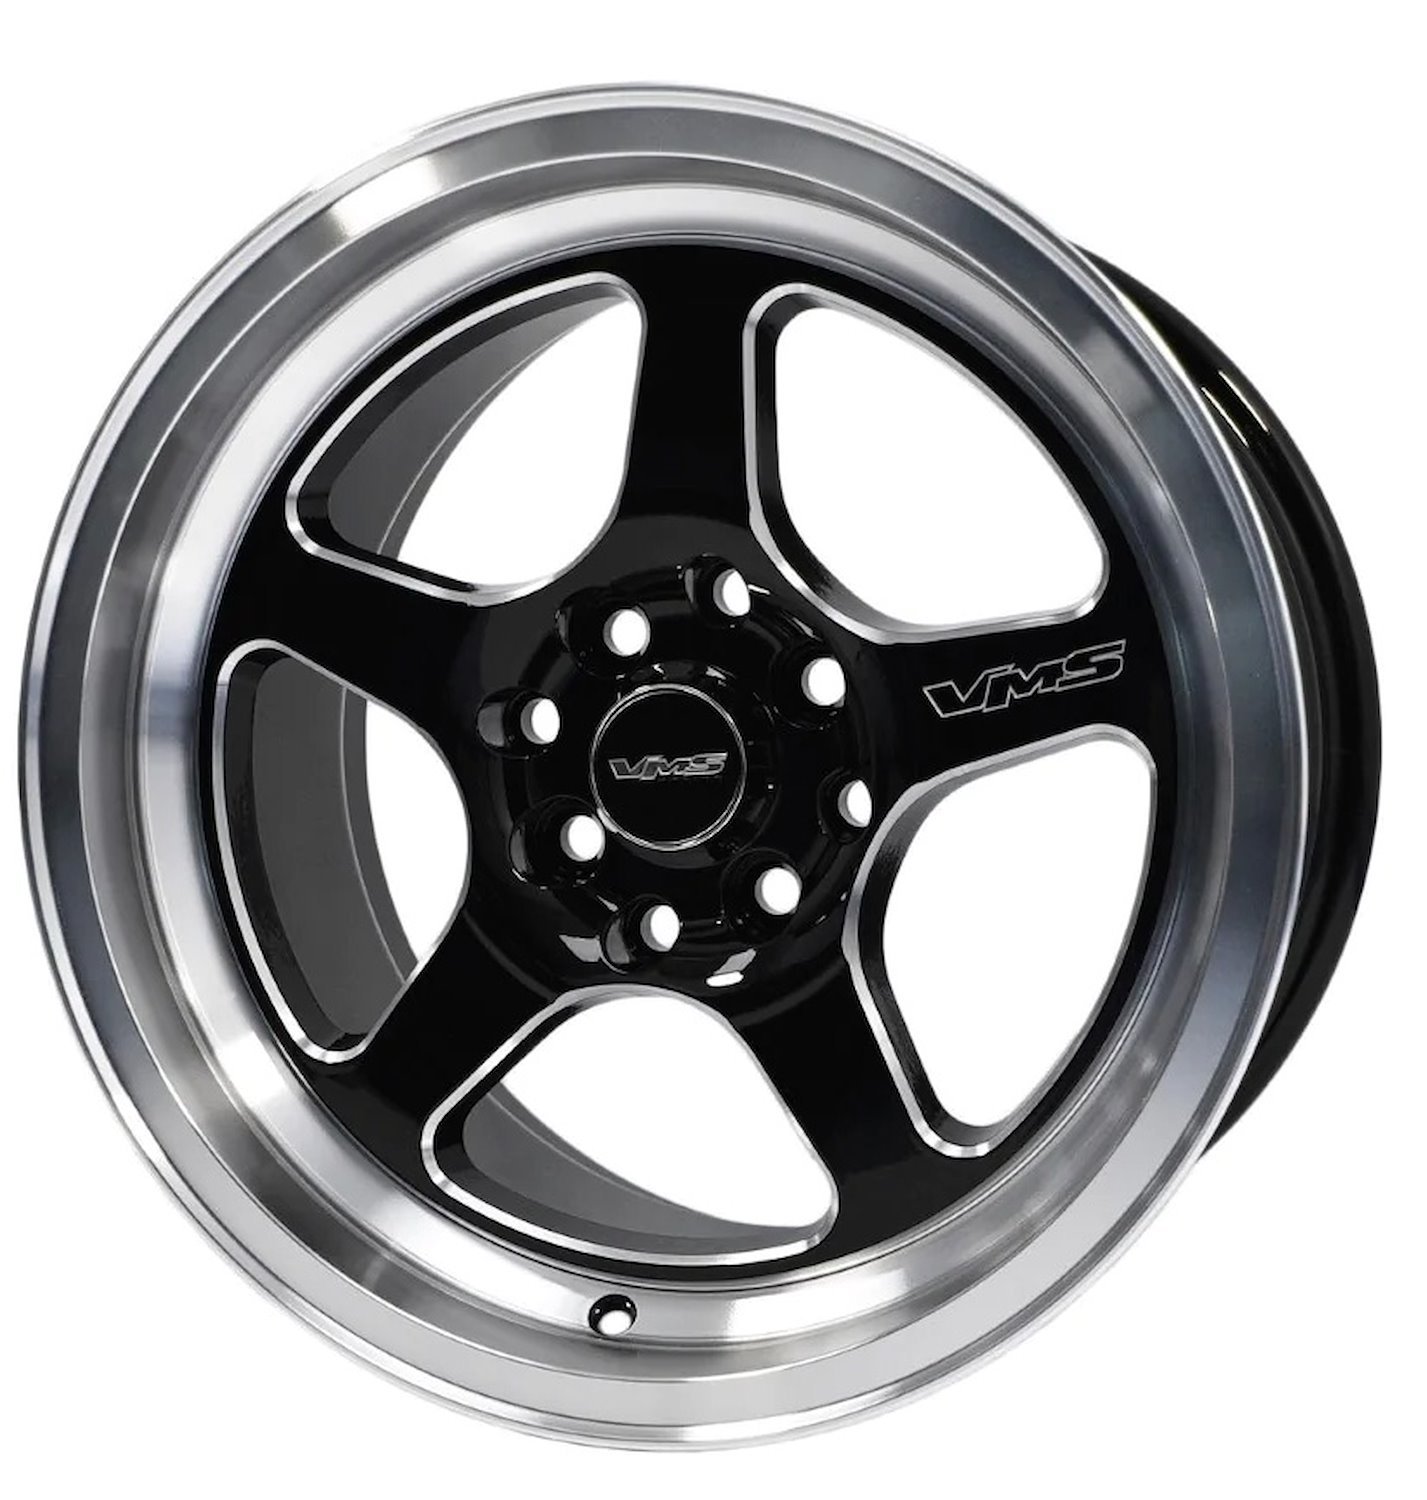 VWMK004 Mohawk Wheel, Size: 15" x 8", Bolt Pattern: 5 x 100 mm [Finish: Gloss Black Milled]